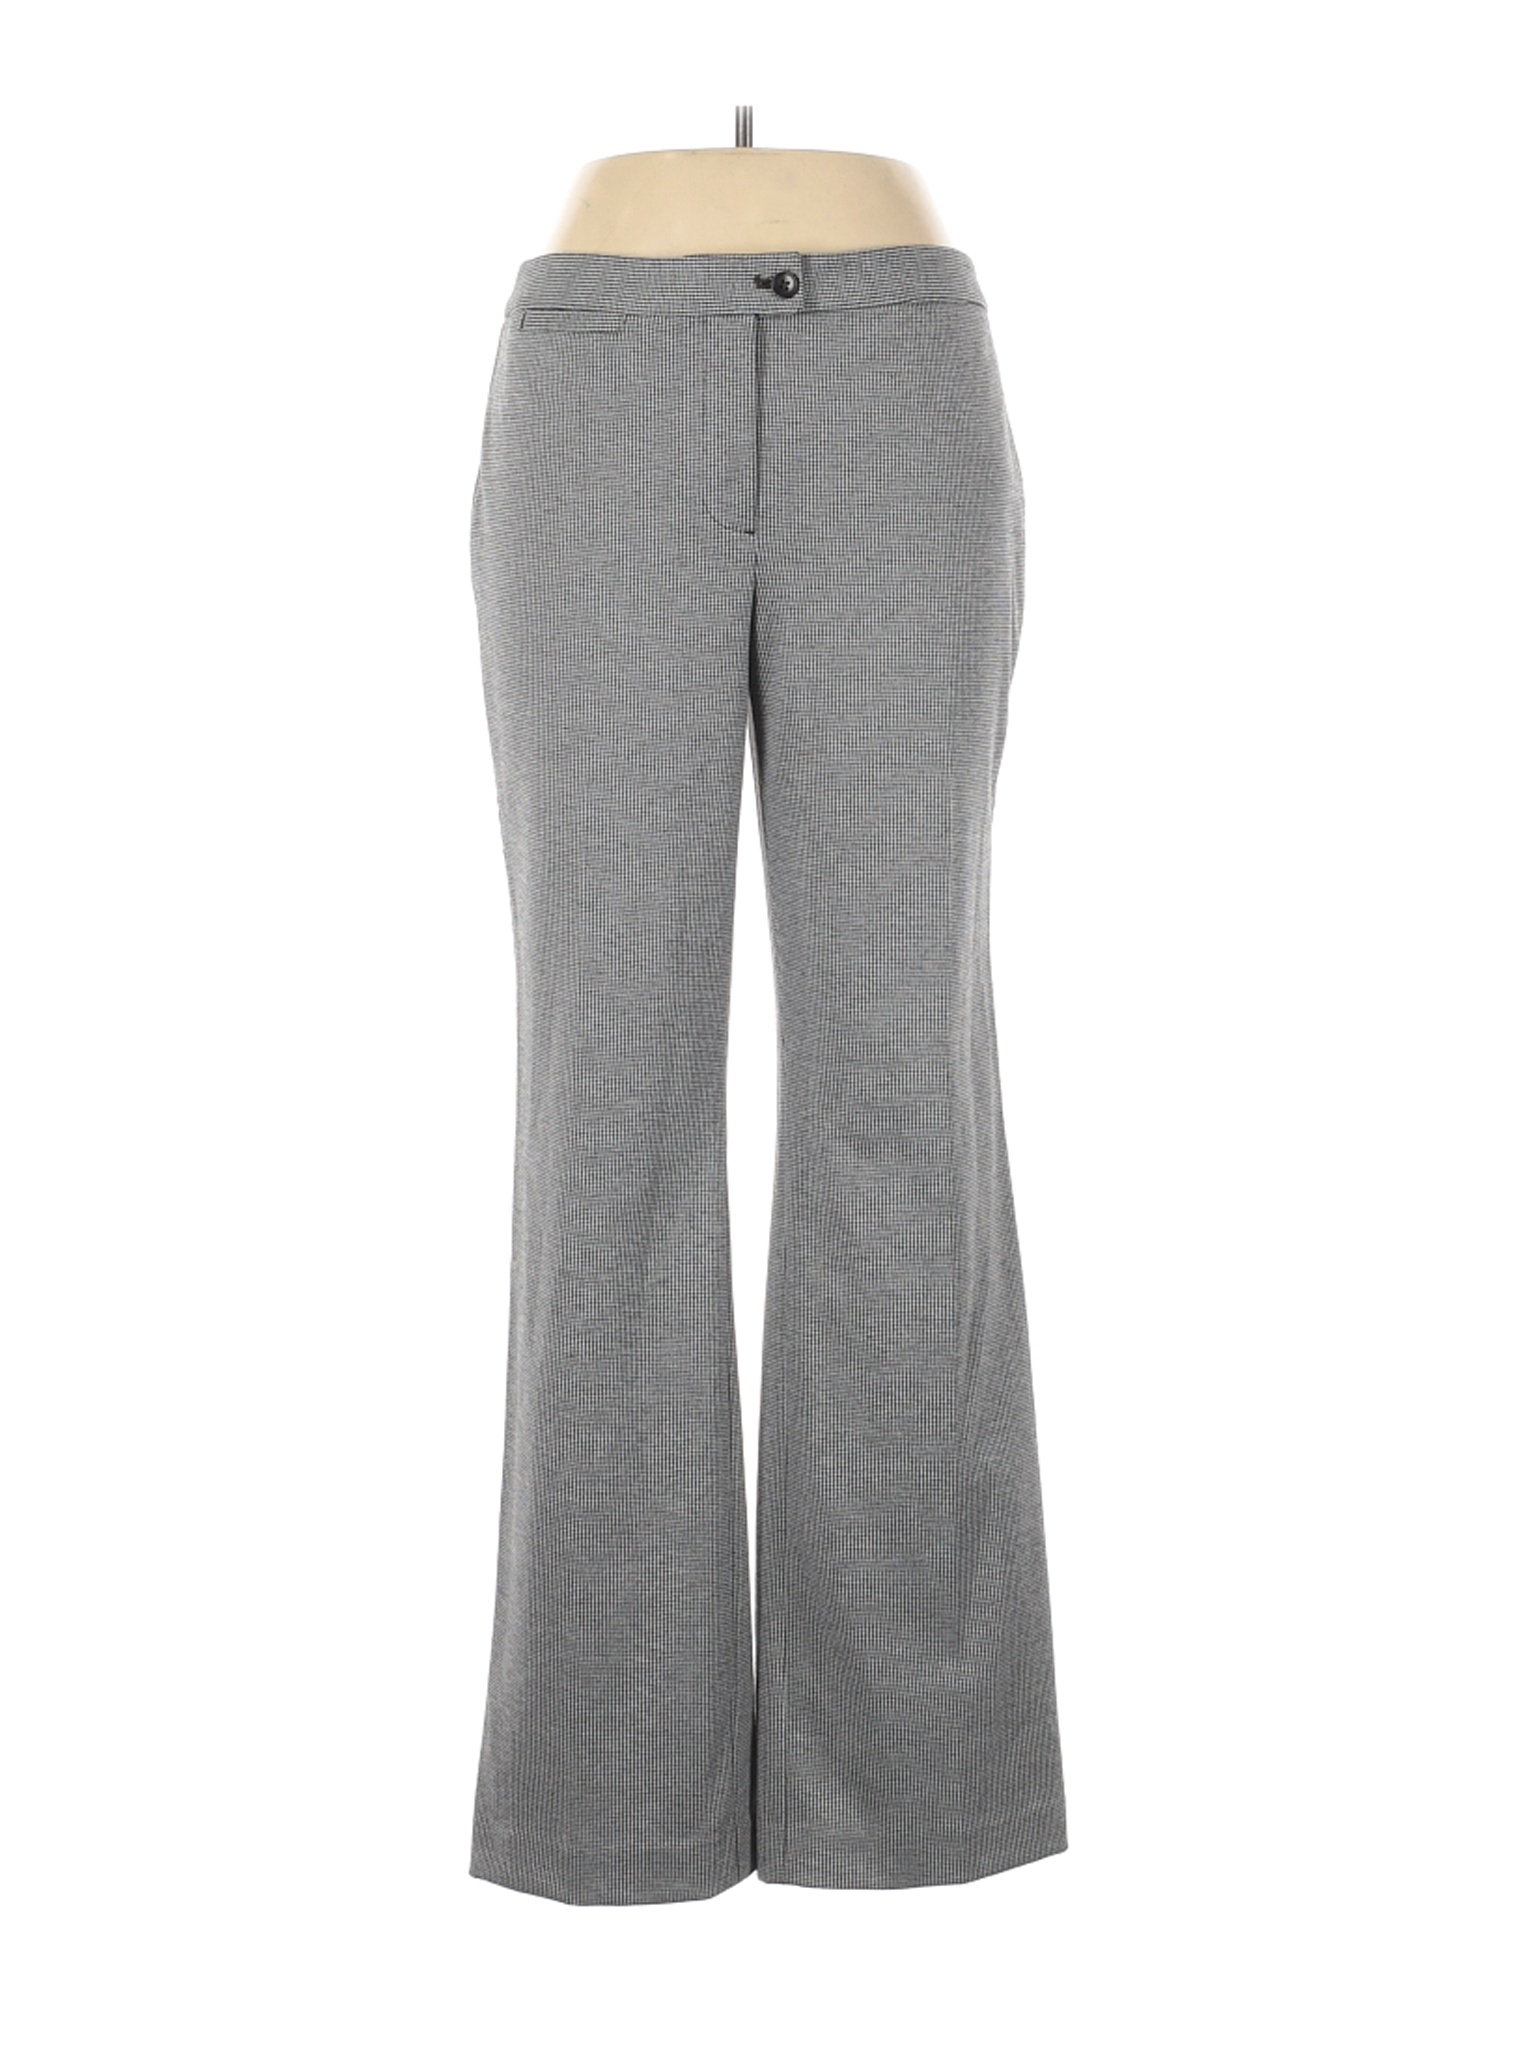 NWT Talbots Women Gray Casual Pants 10 | eBay